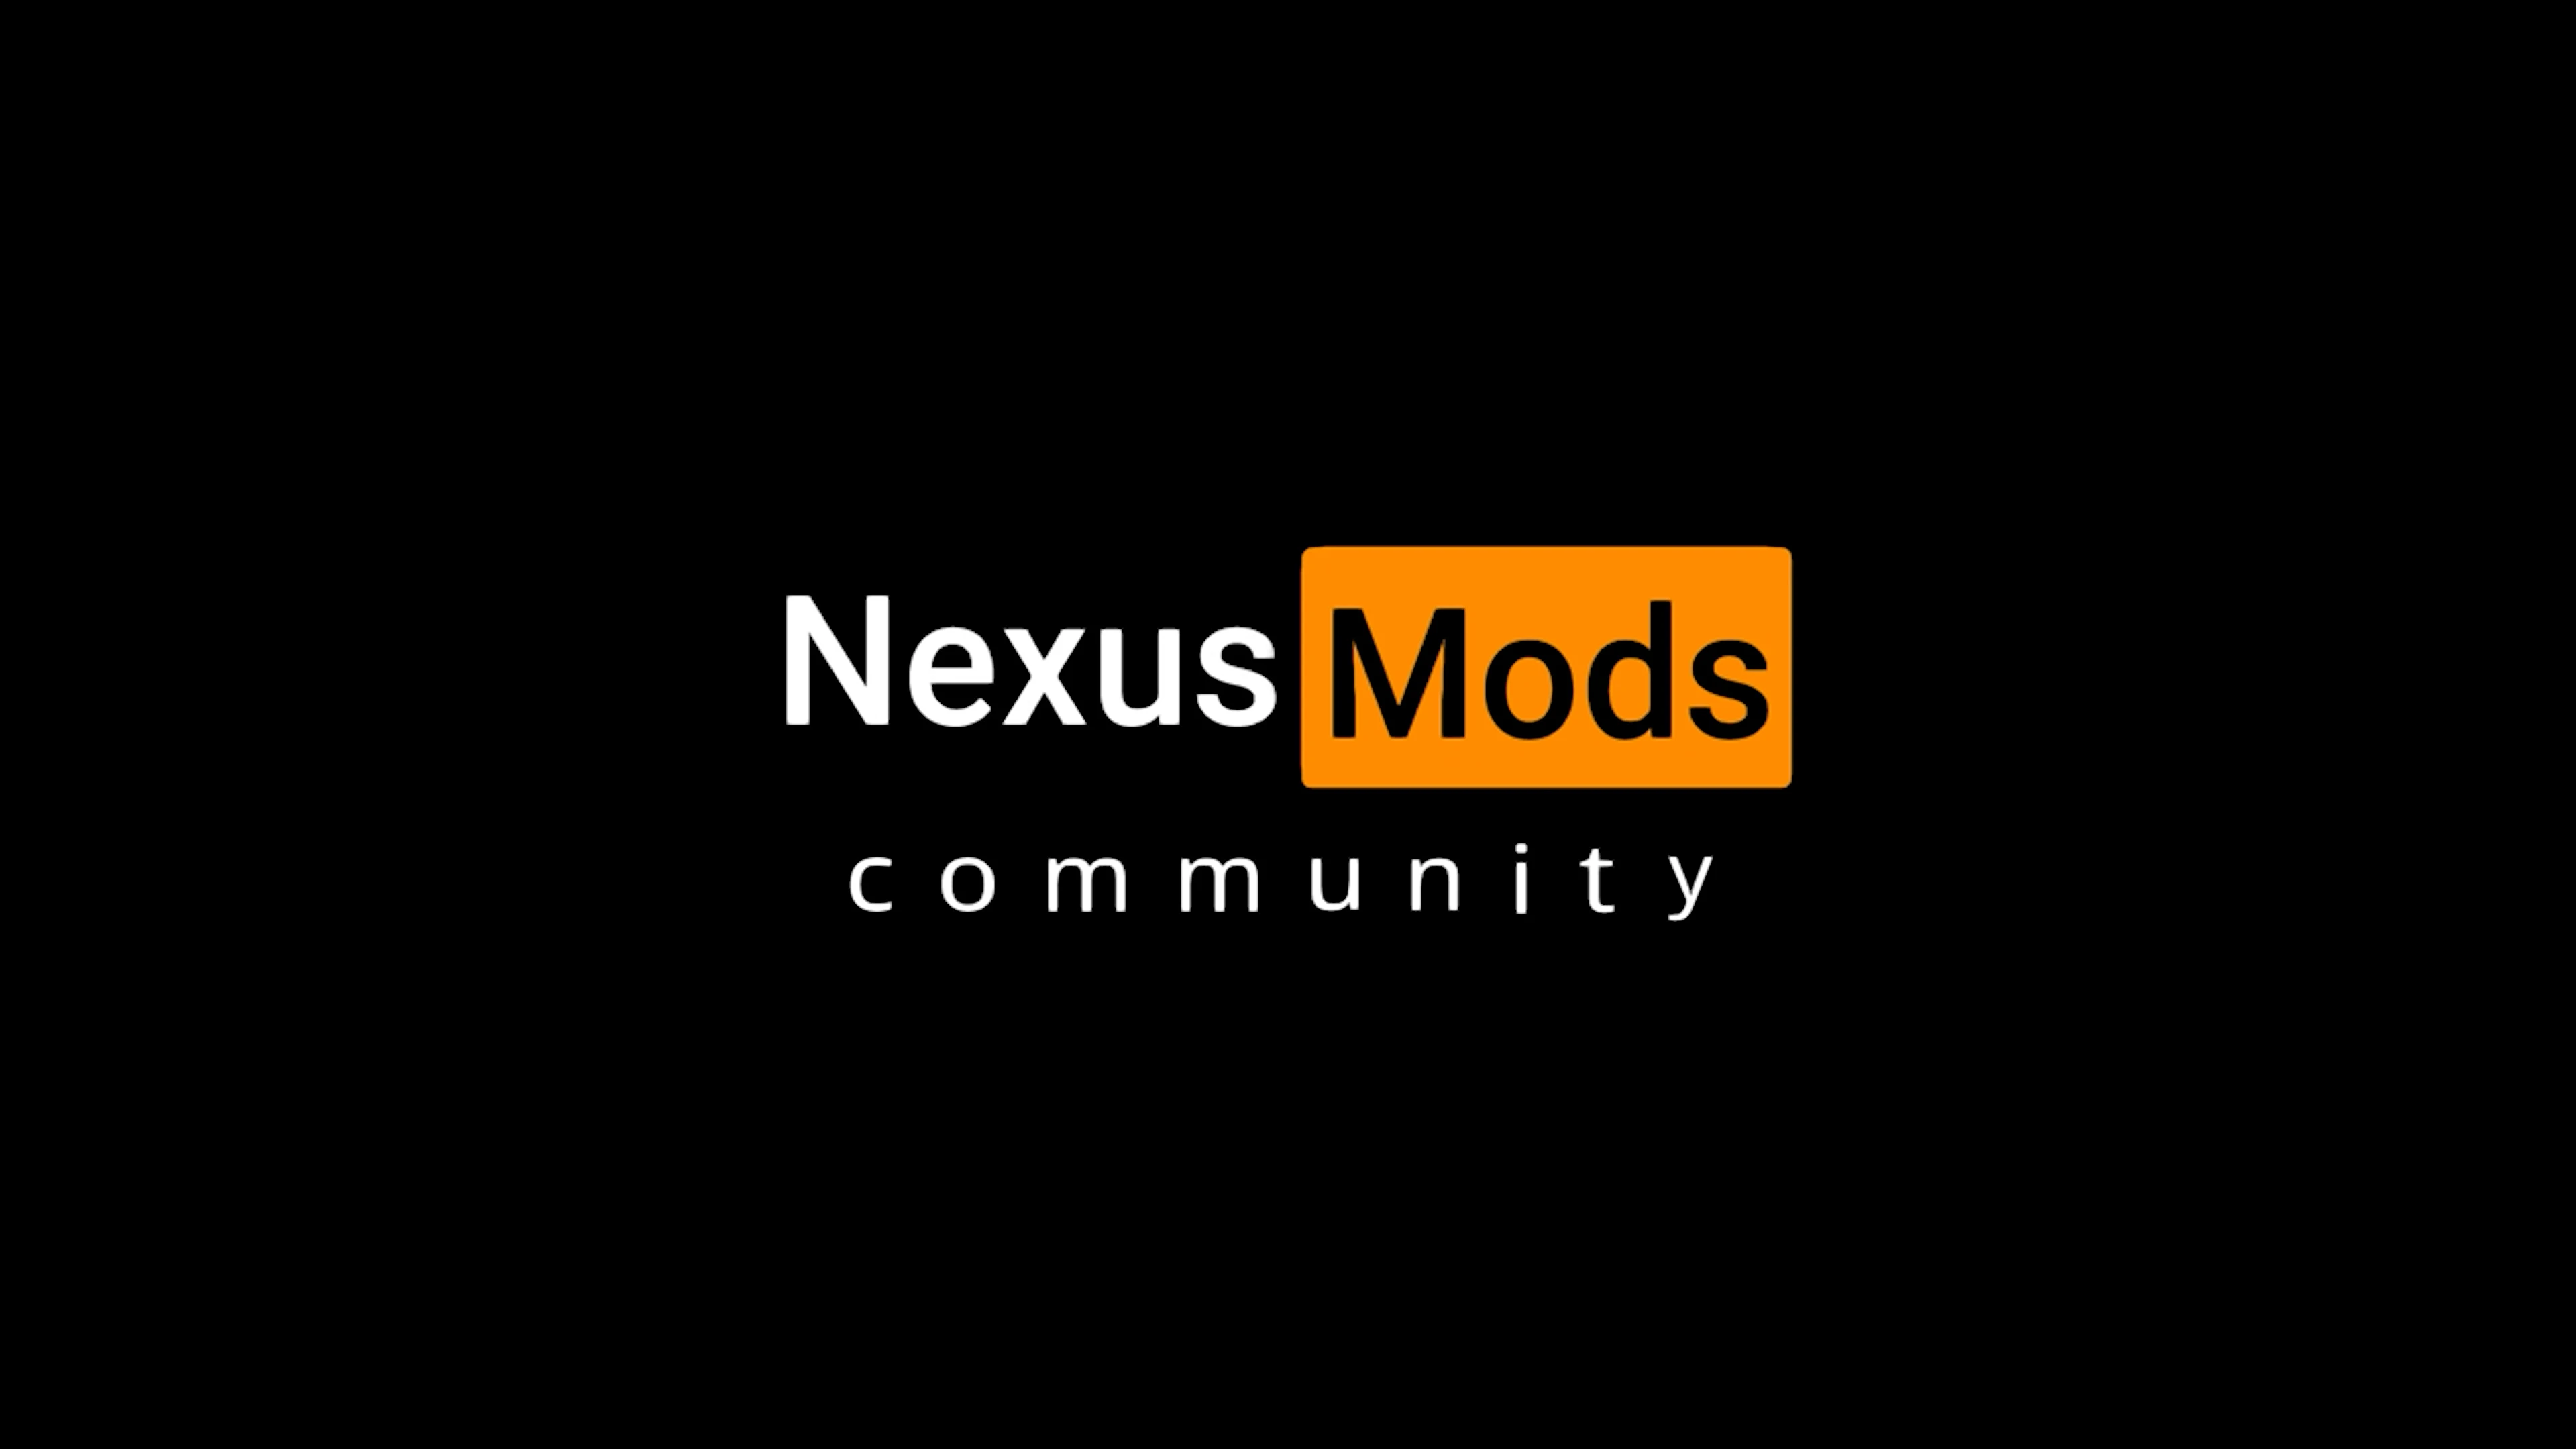 Nexus mods and community